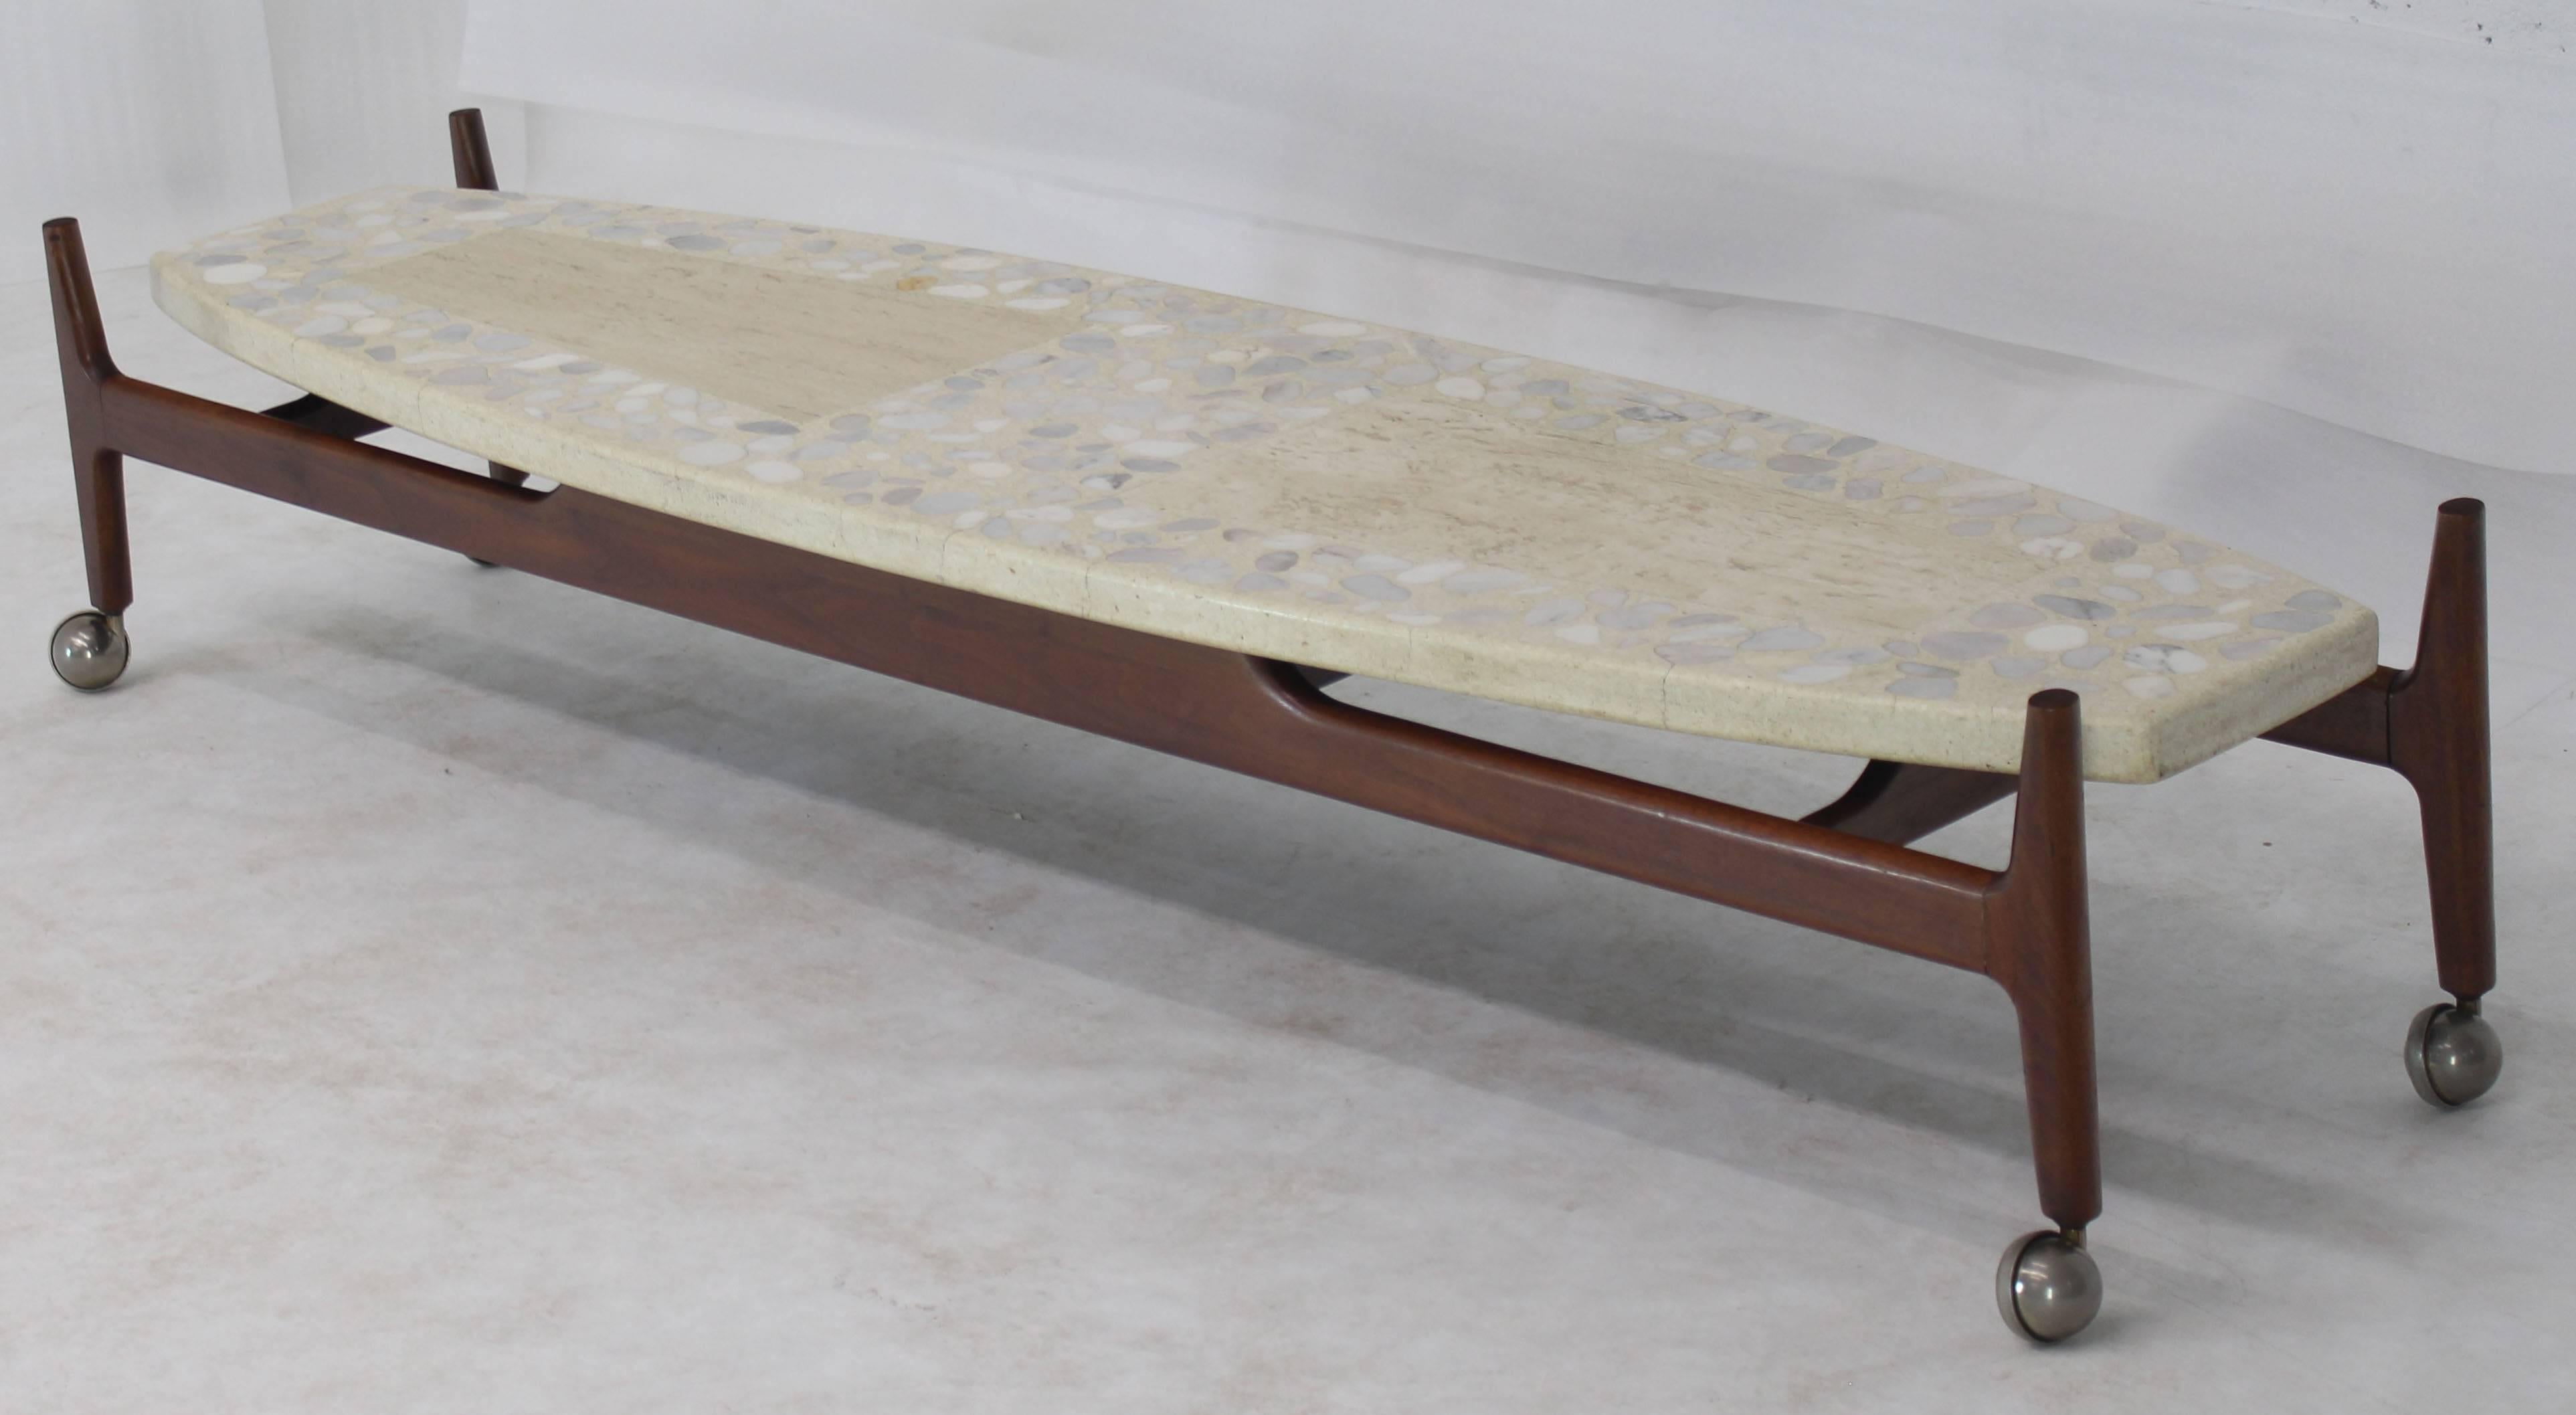 Floating terrazzo top oiled walnut base long surfboard shape coffee table Kagan decor.